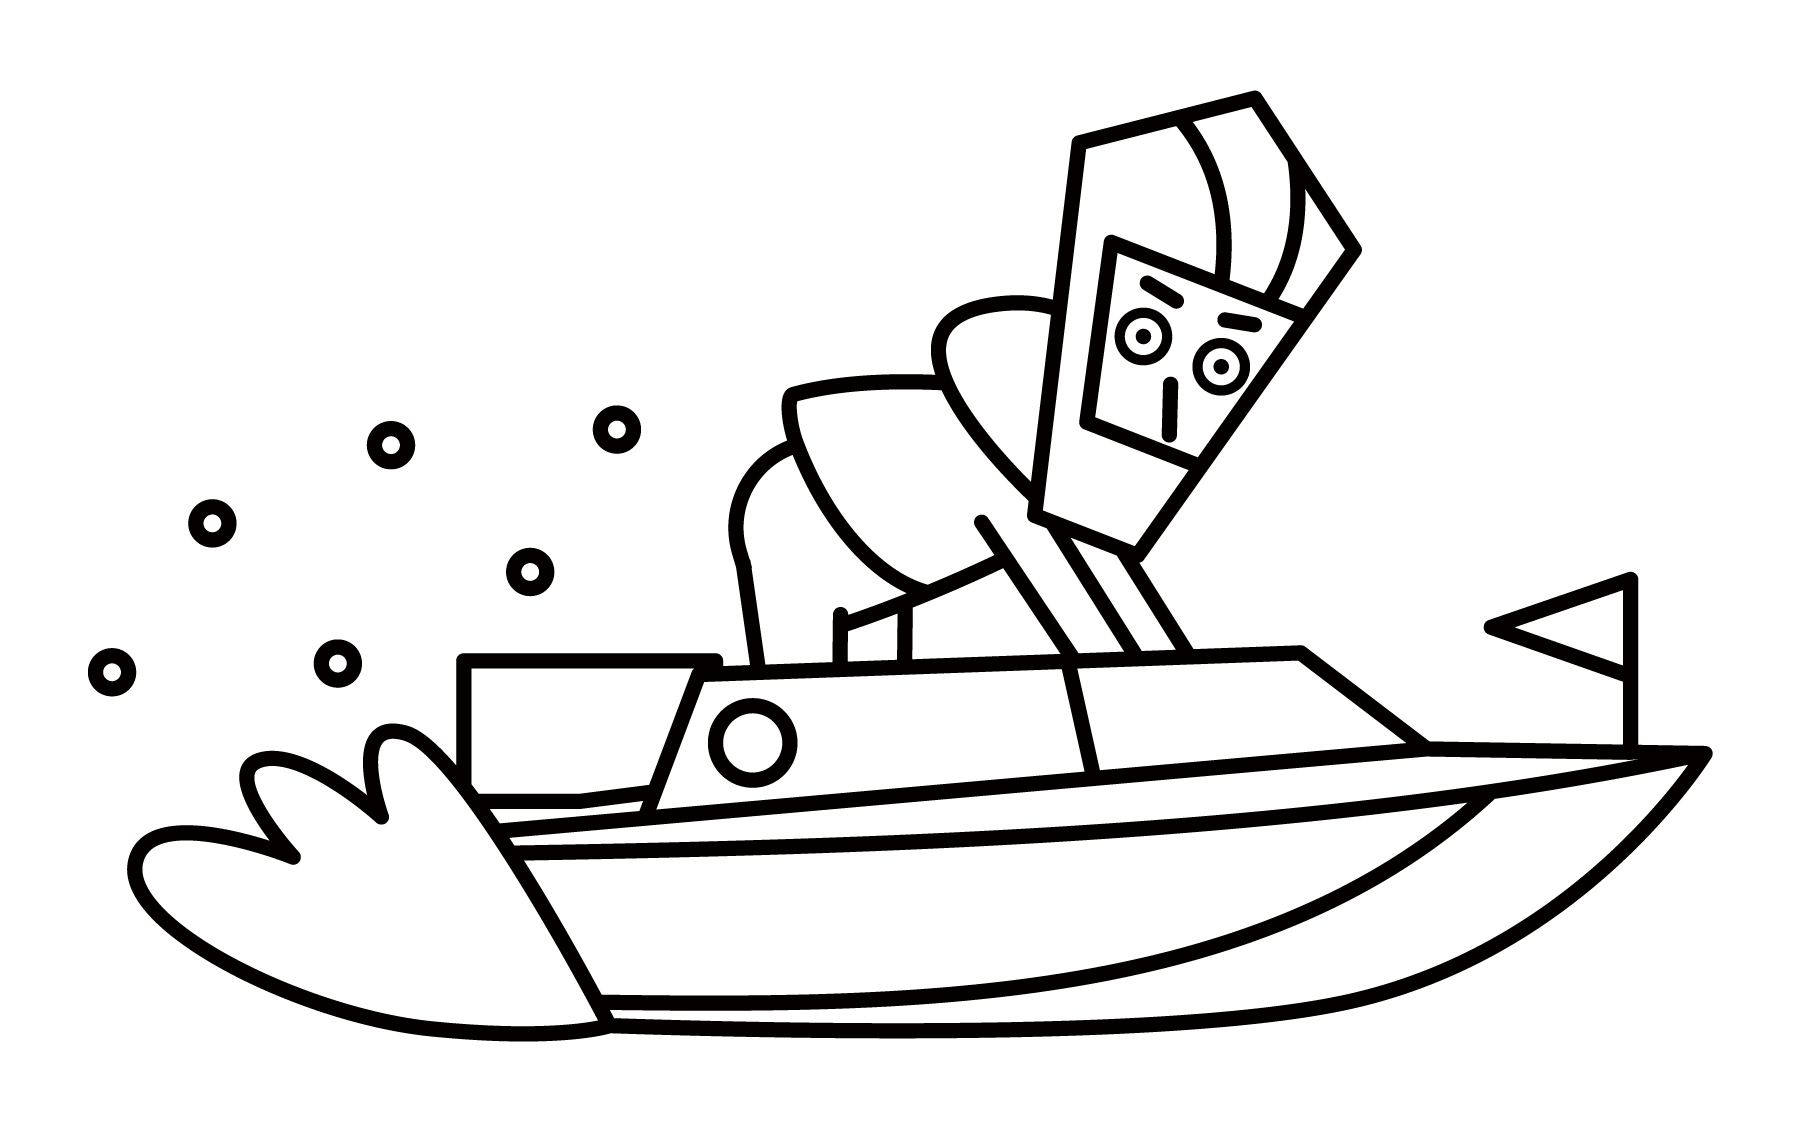 Illustration of a male boat racer